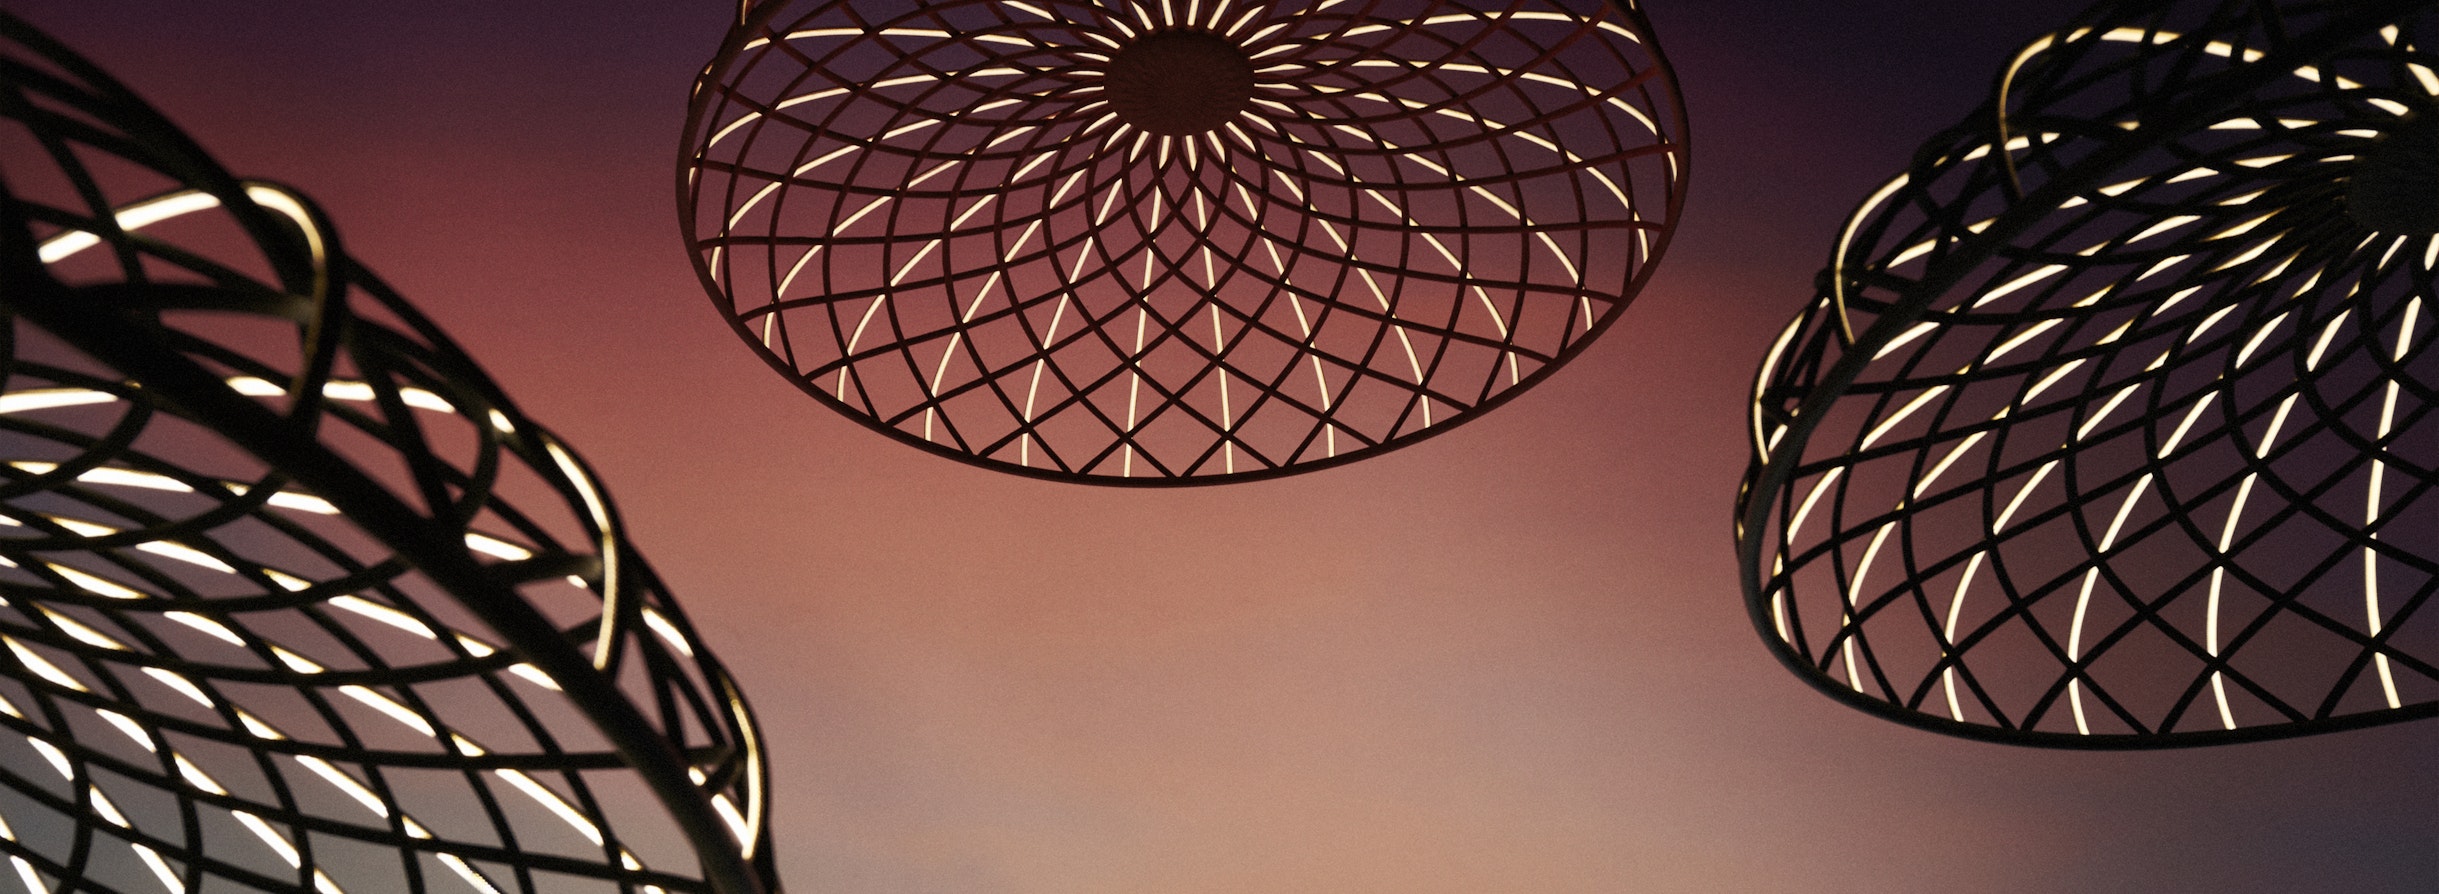 Skynest, the new Flos lamp designed by Marcel Wanders studio